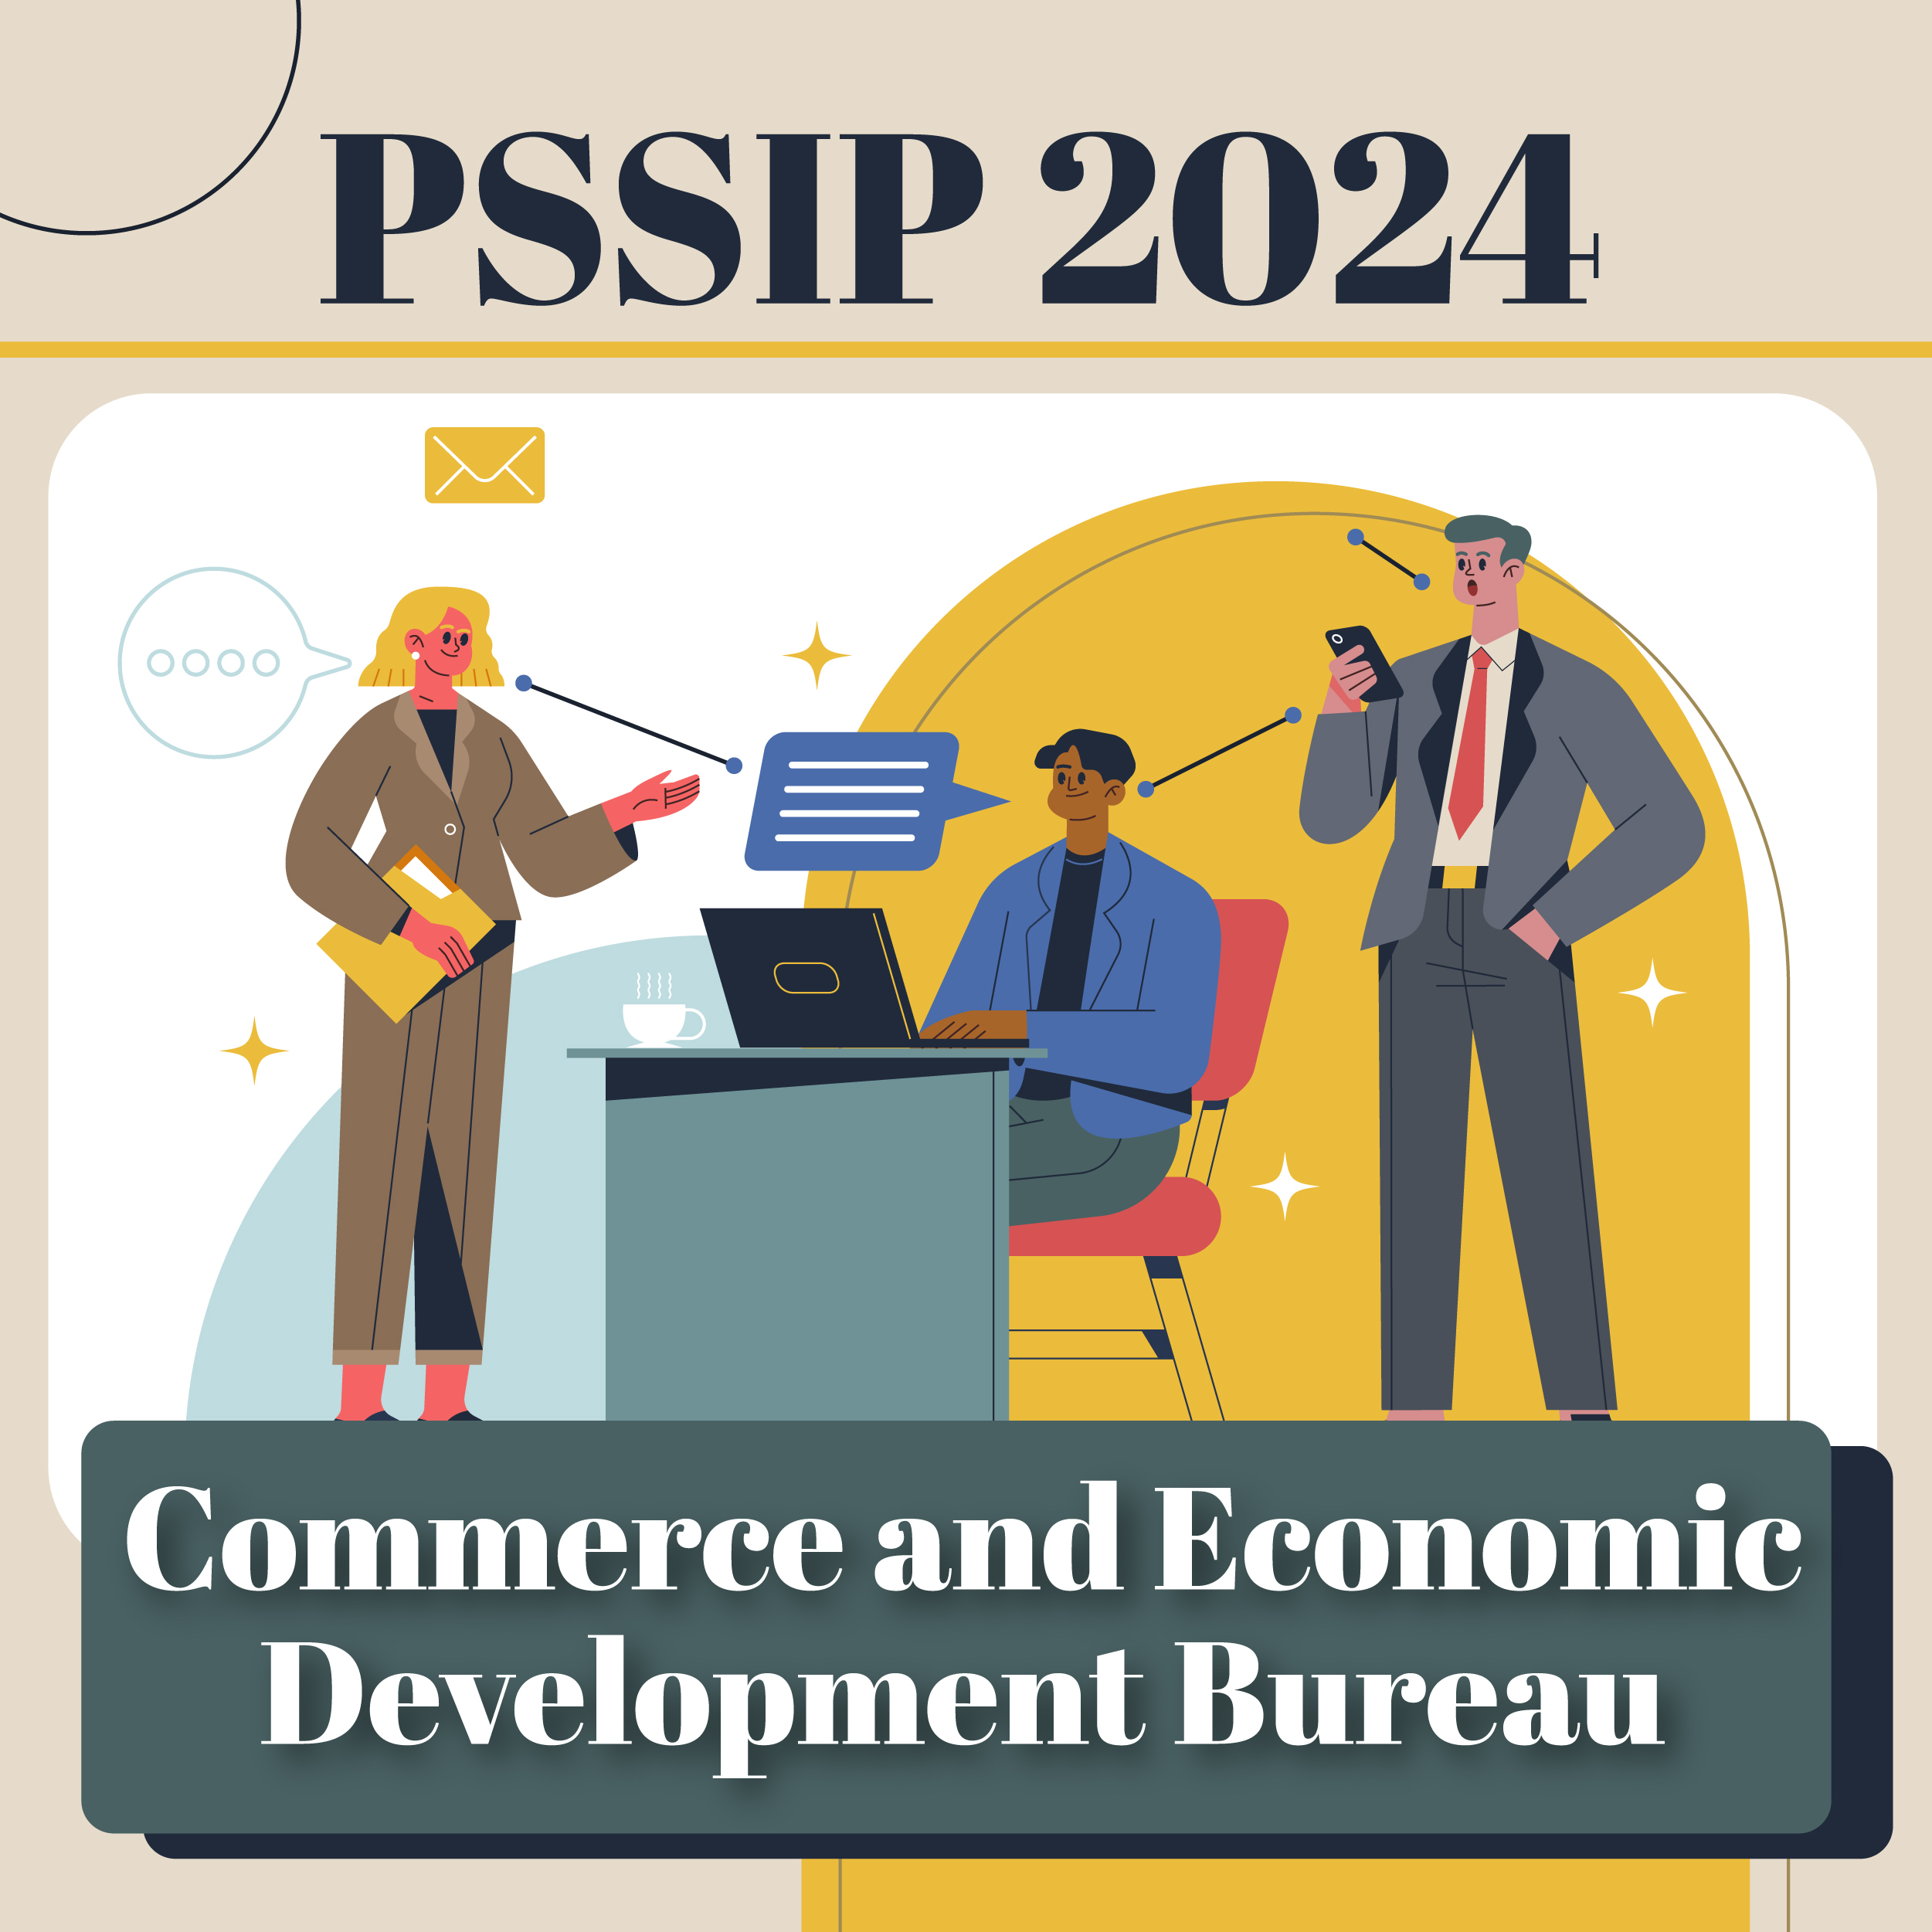 PSSIP2024 – Commerce and Economic Development Bureau